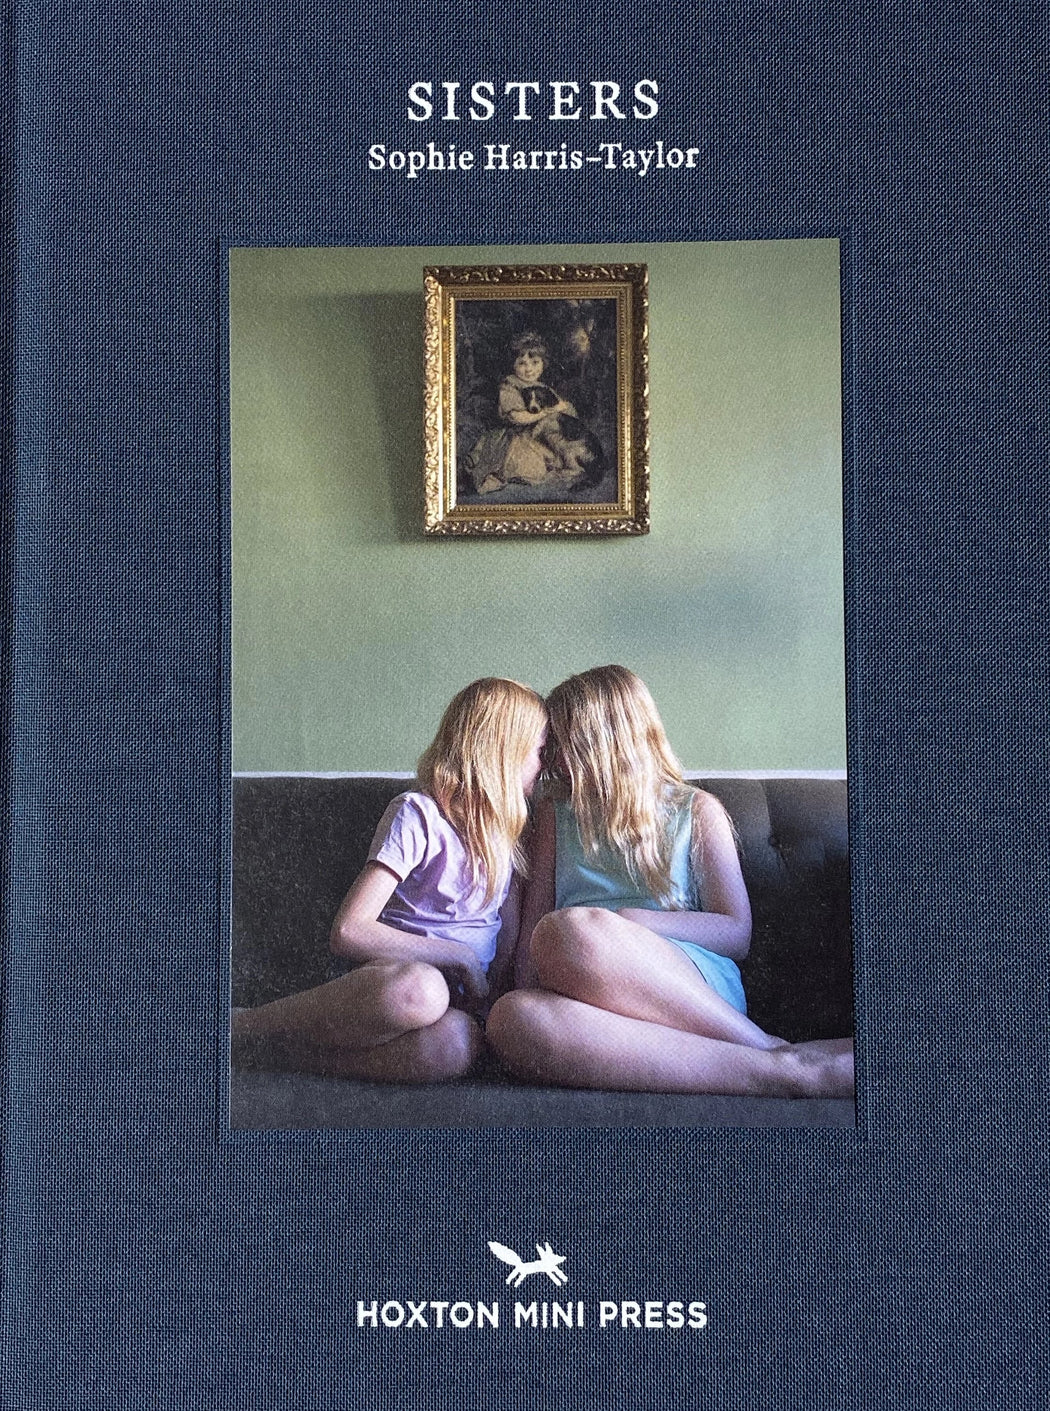 "Sisters" by Sophie Harris-Taylor